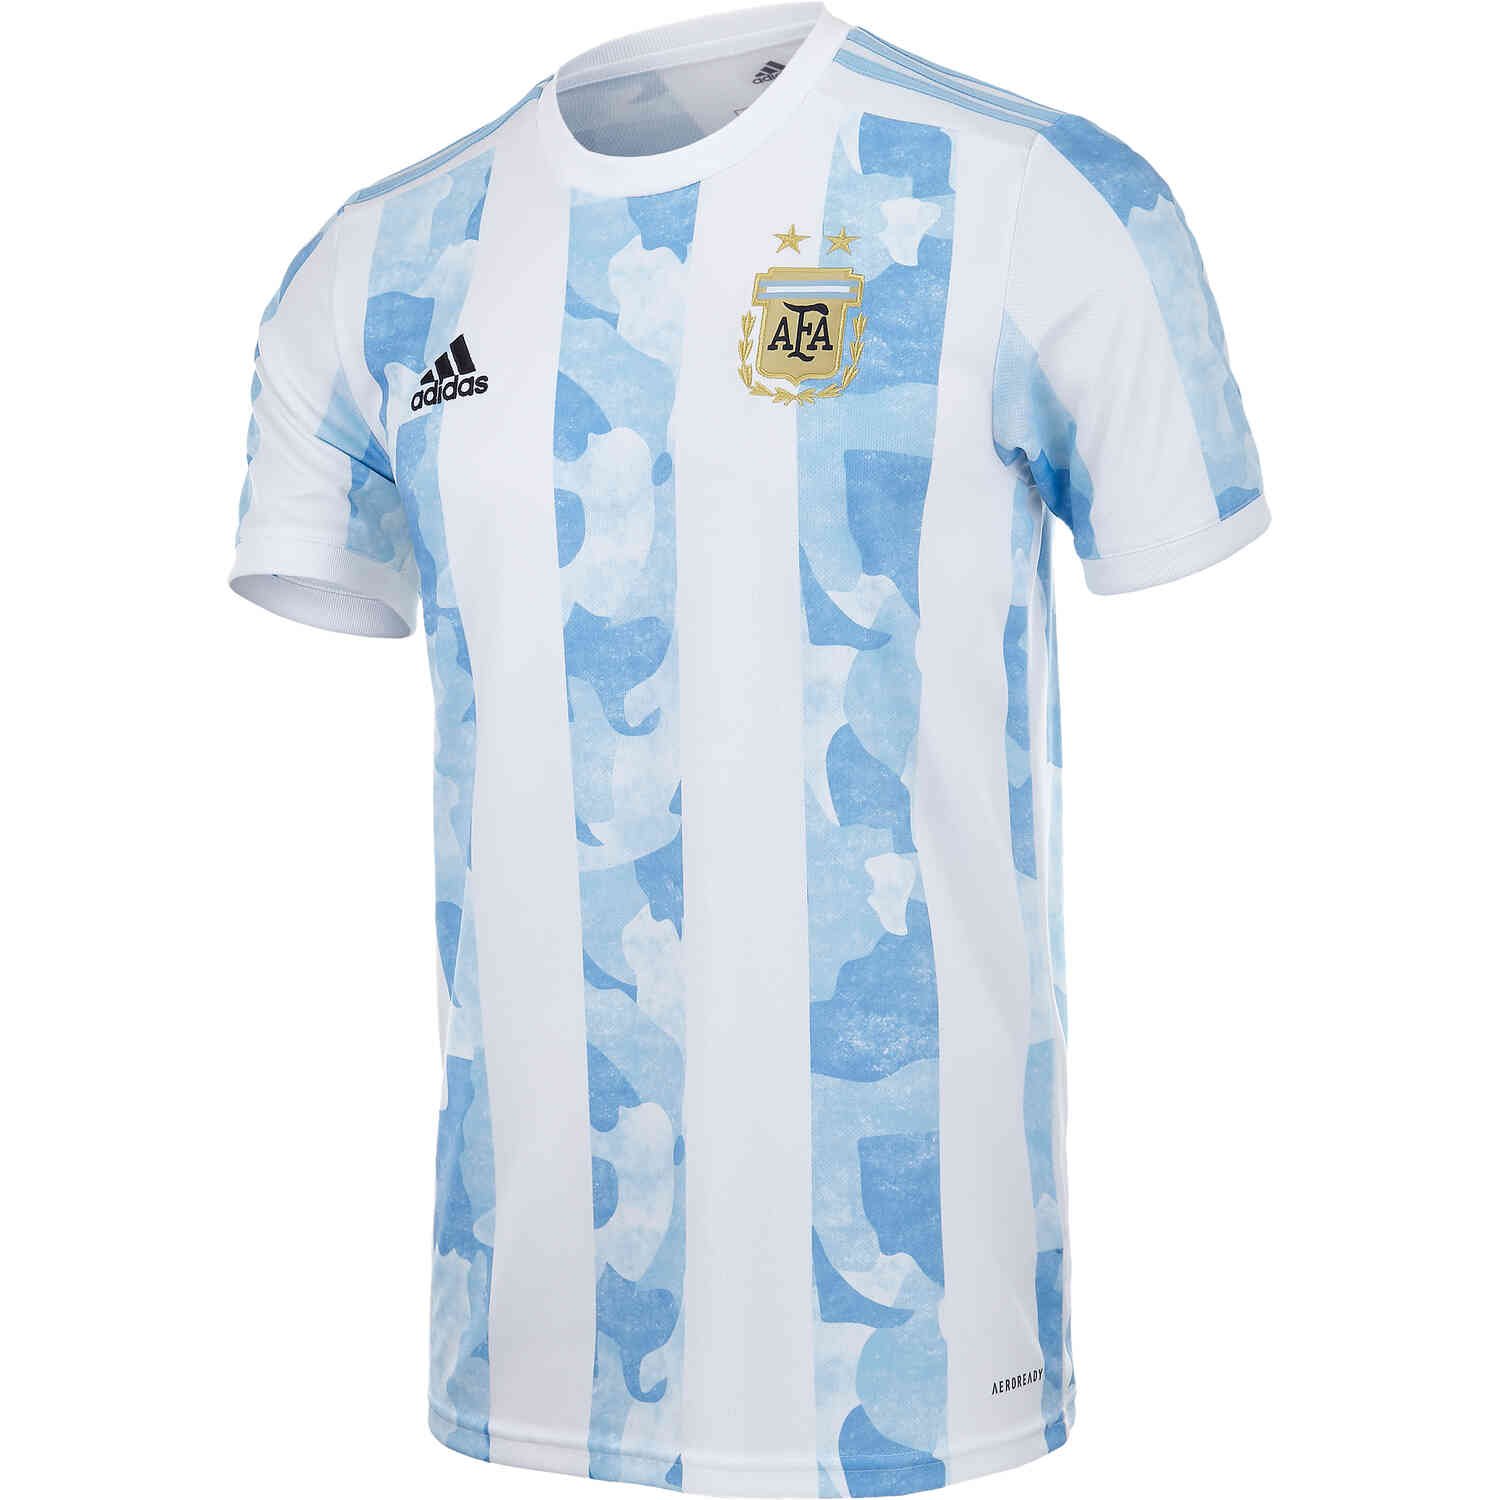 Argentina Football Jersey 2022 / New Argentina Away World Cup 2014